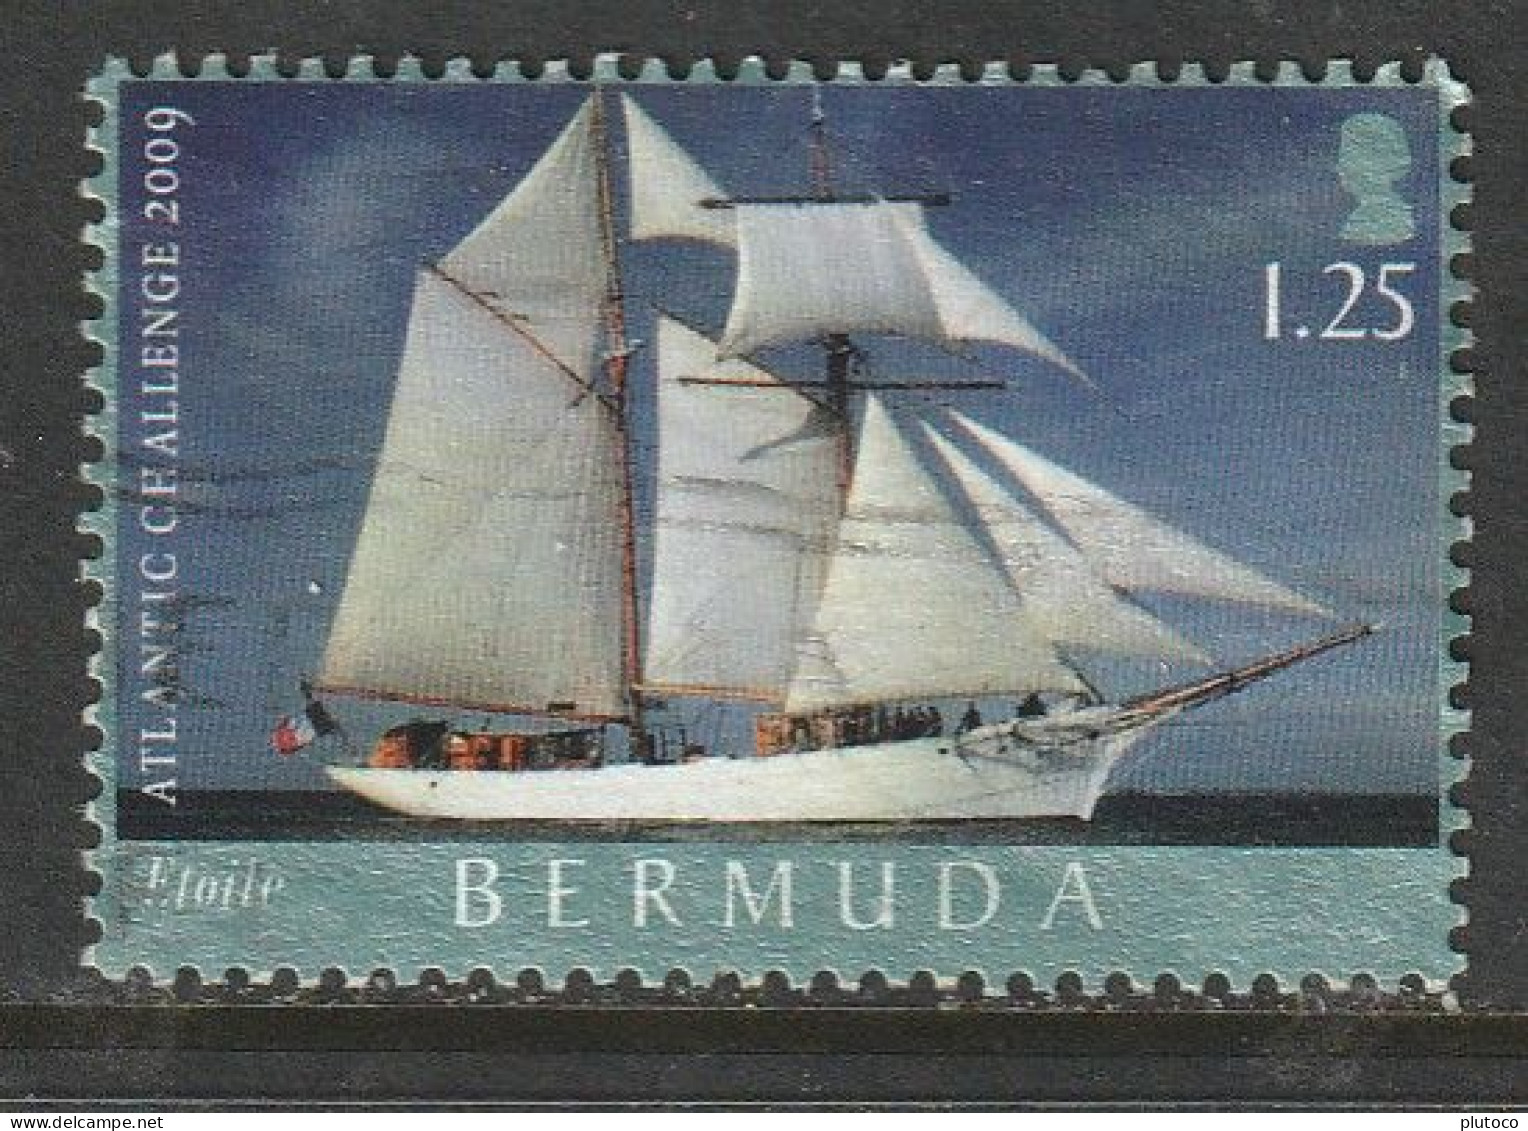 BERMUDA, USED STAMP, OBLITERÉ, SELLO USADO - Bermudas